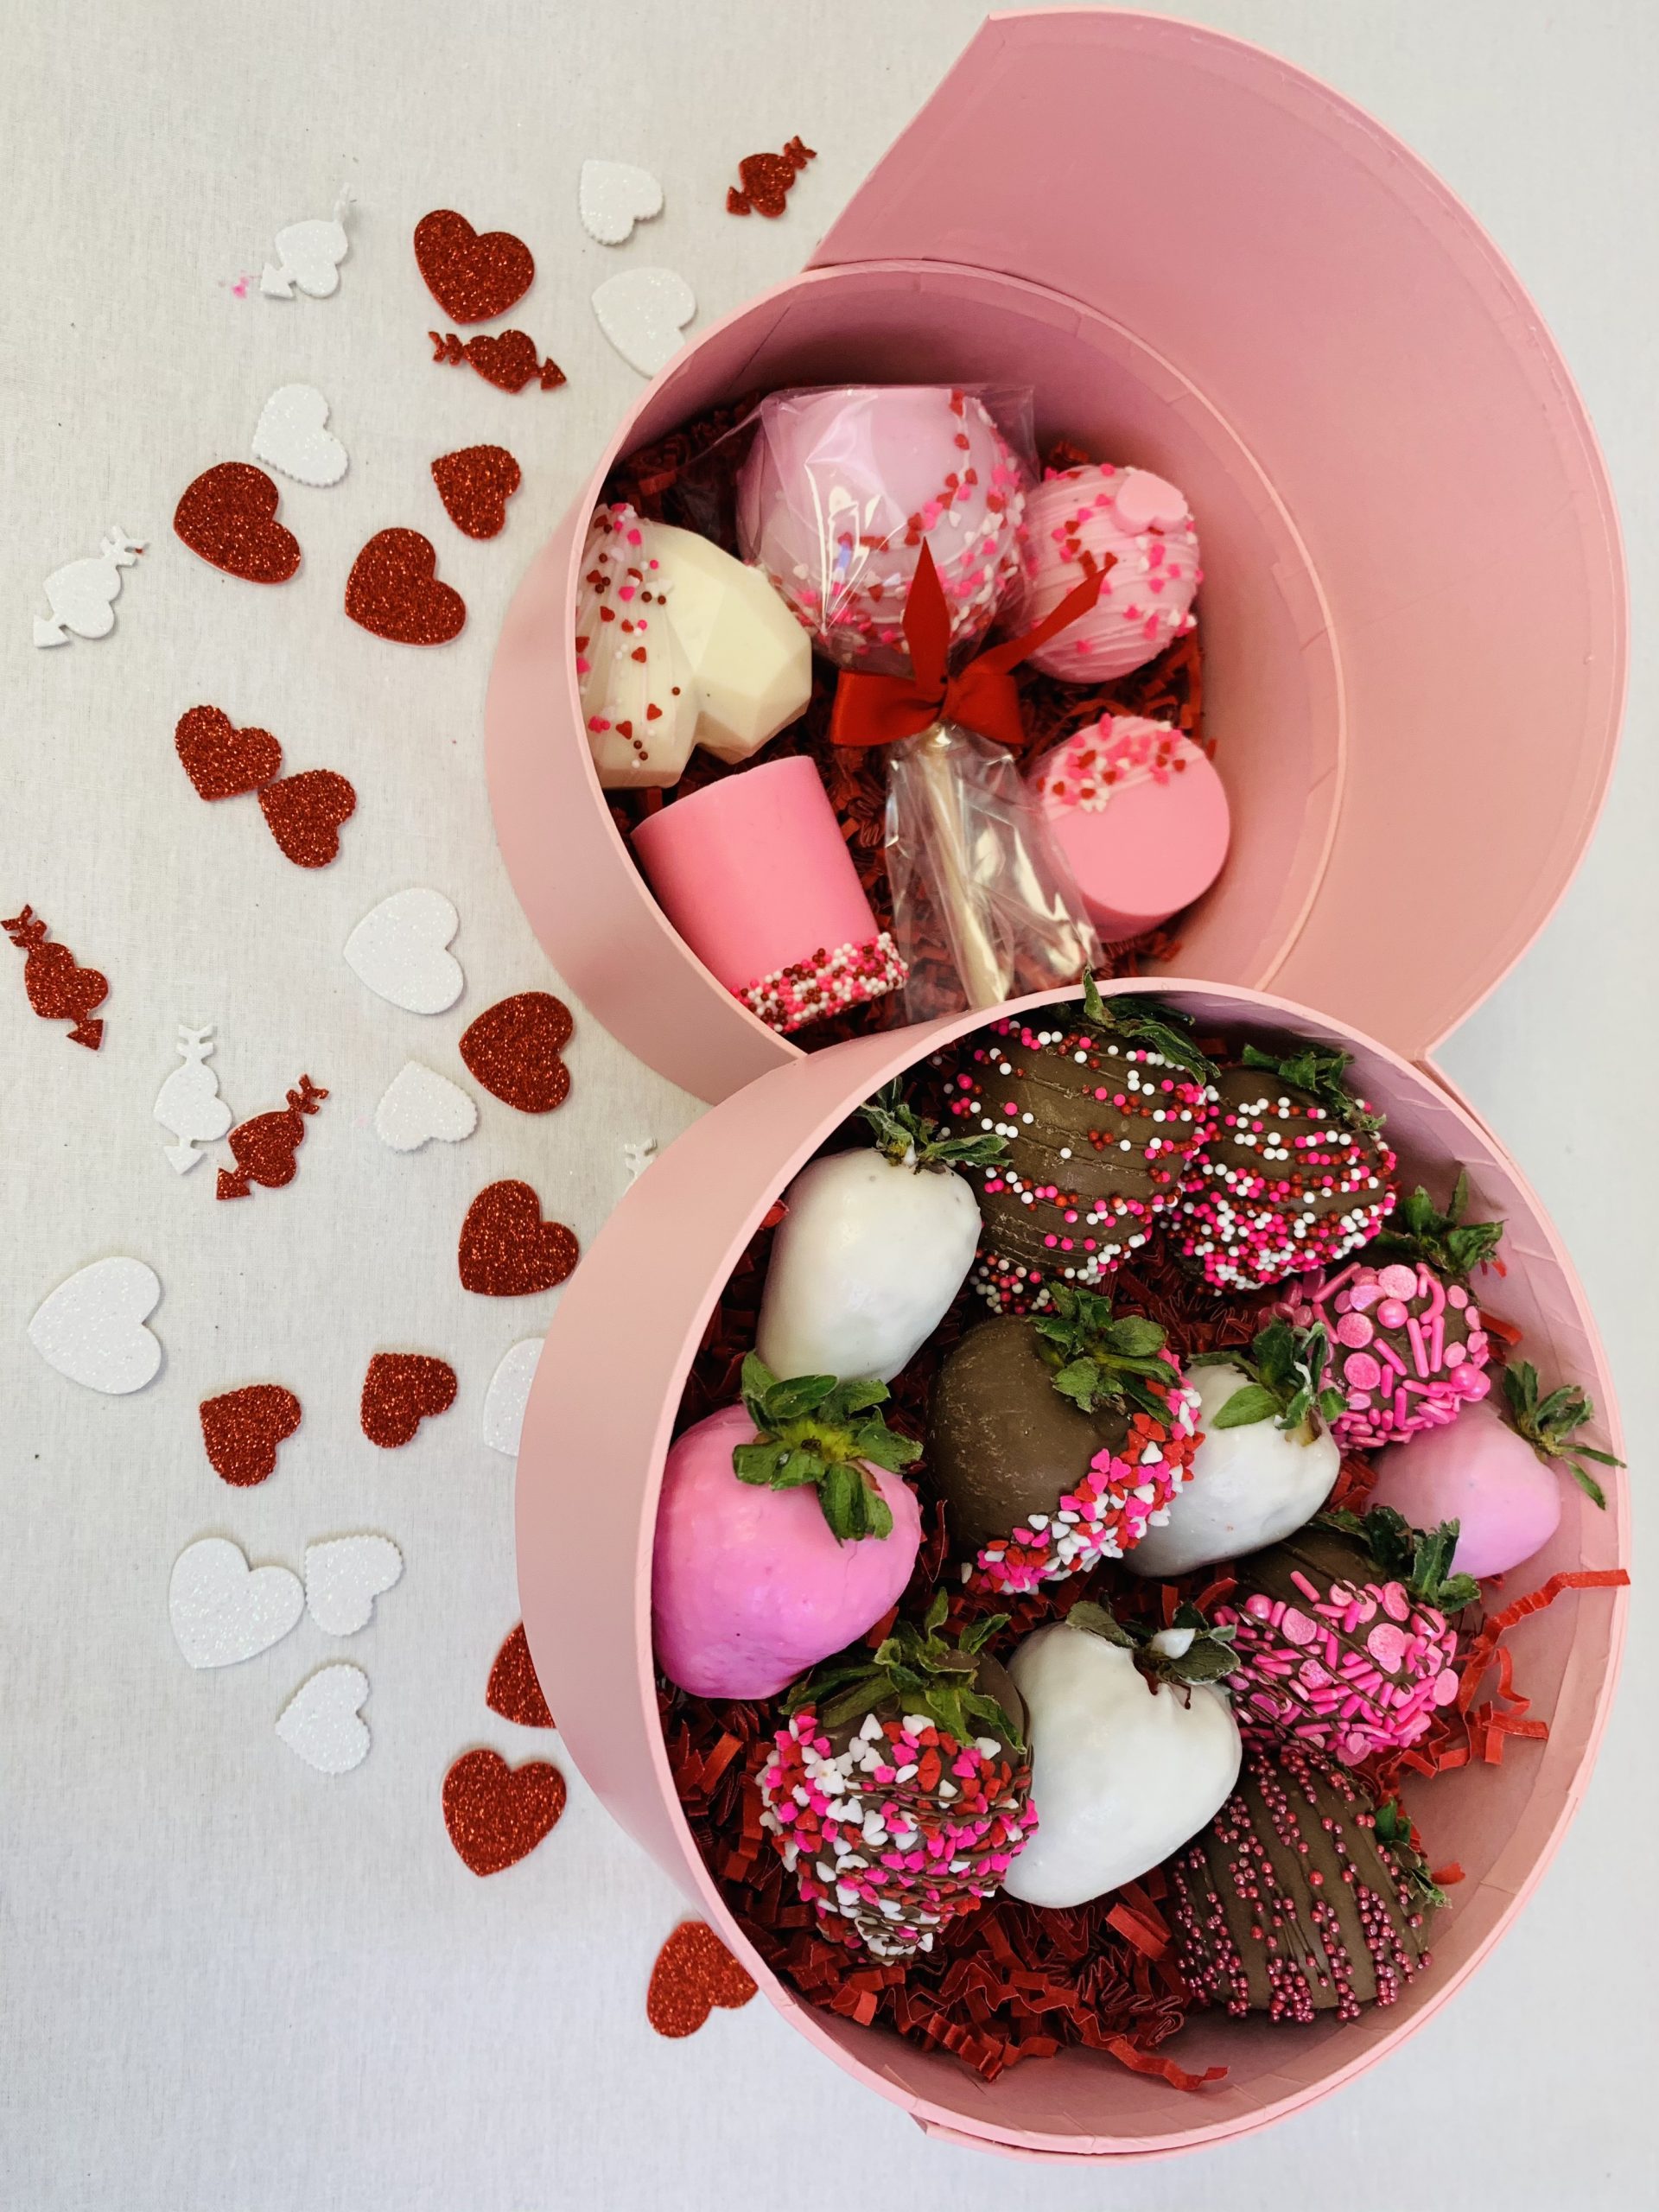 Valentine's Day Desserts Treat Gift Box- with wine